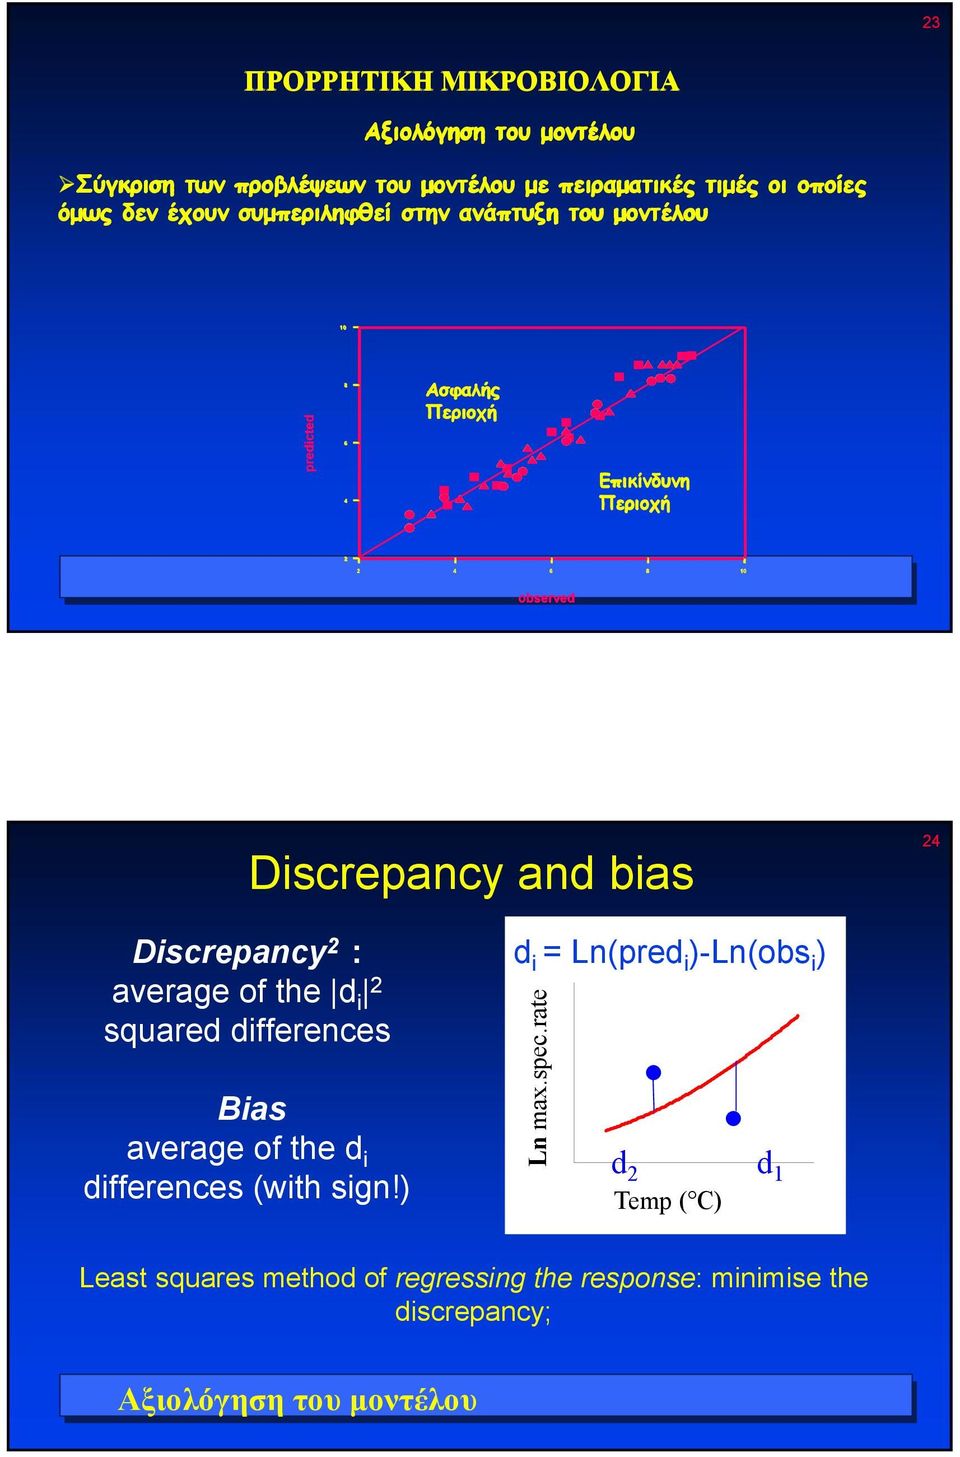 Discrepancy 2 : average of the d i 2 squared differences Bias average of the d i differences (with sign!) d i = Ln(pred i )-Ln(obs i ) 0.